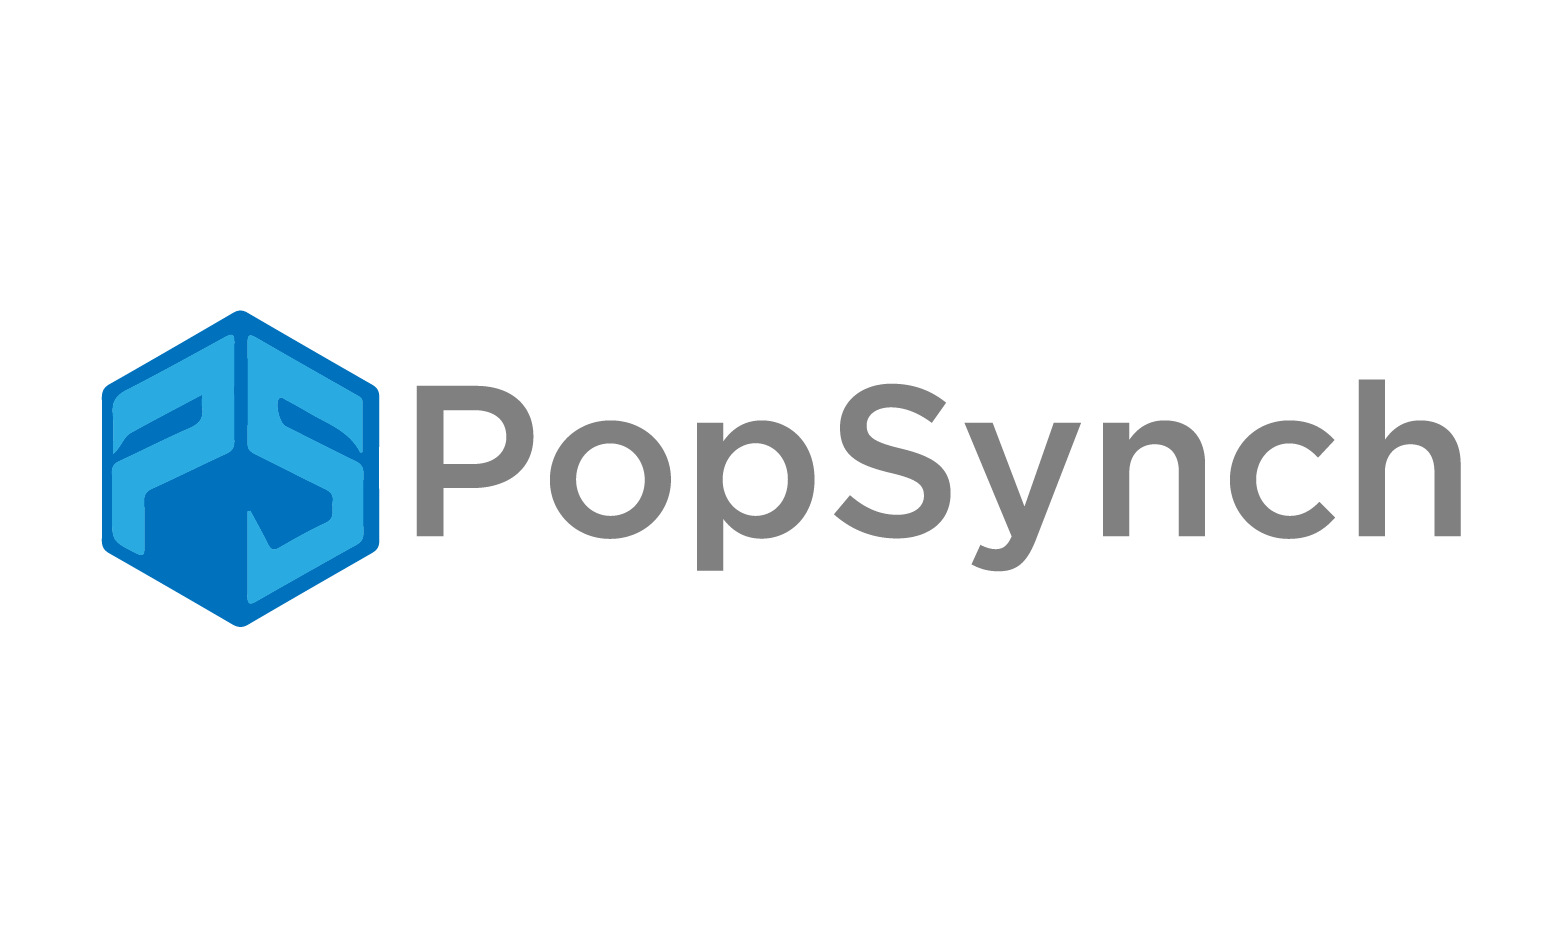 PopSynch.com - Creative brandable domain for sale